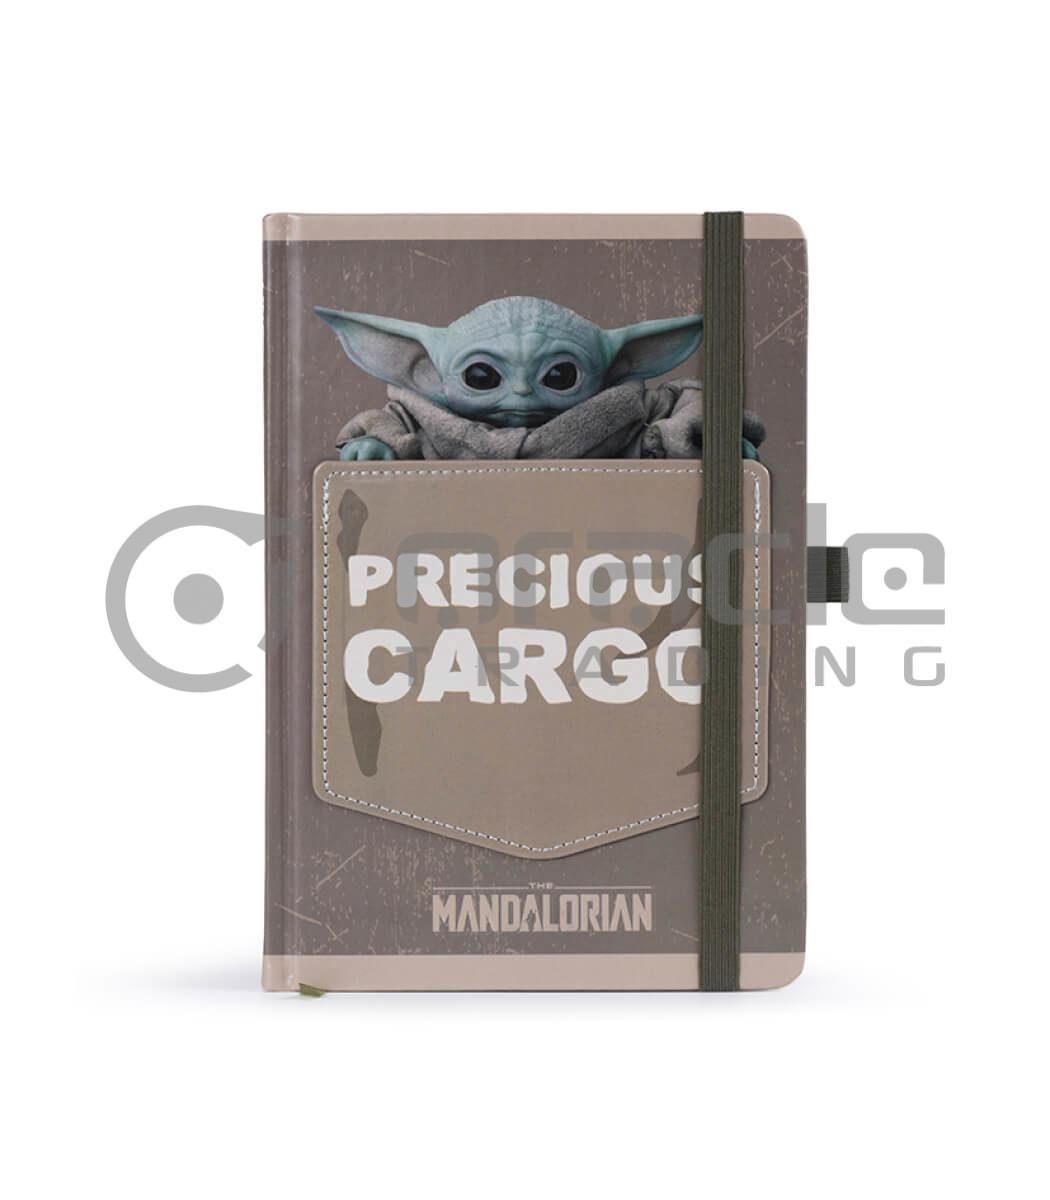 Star Wars: The Mandalorian Notebook - Precious Cargo (Premium)